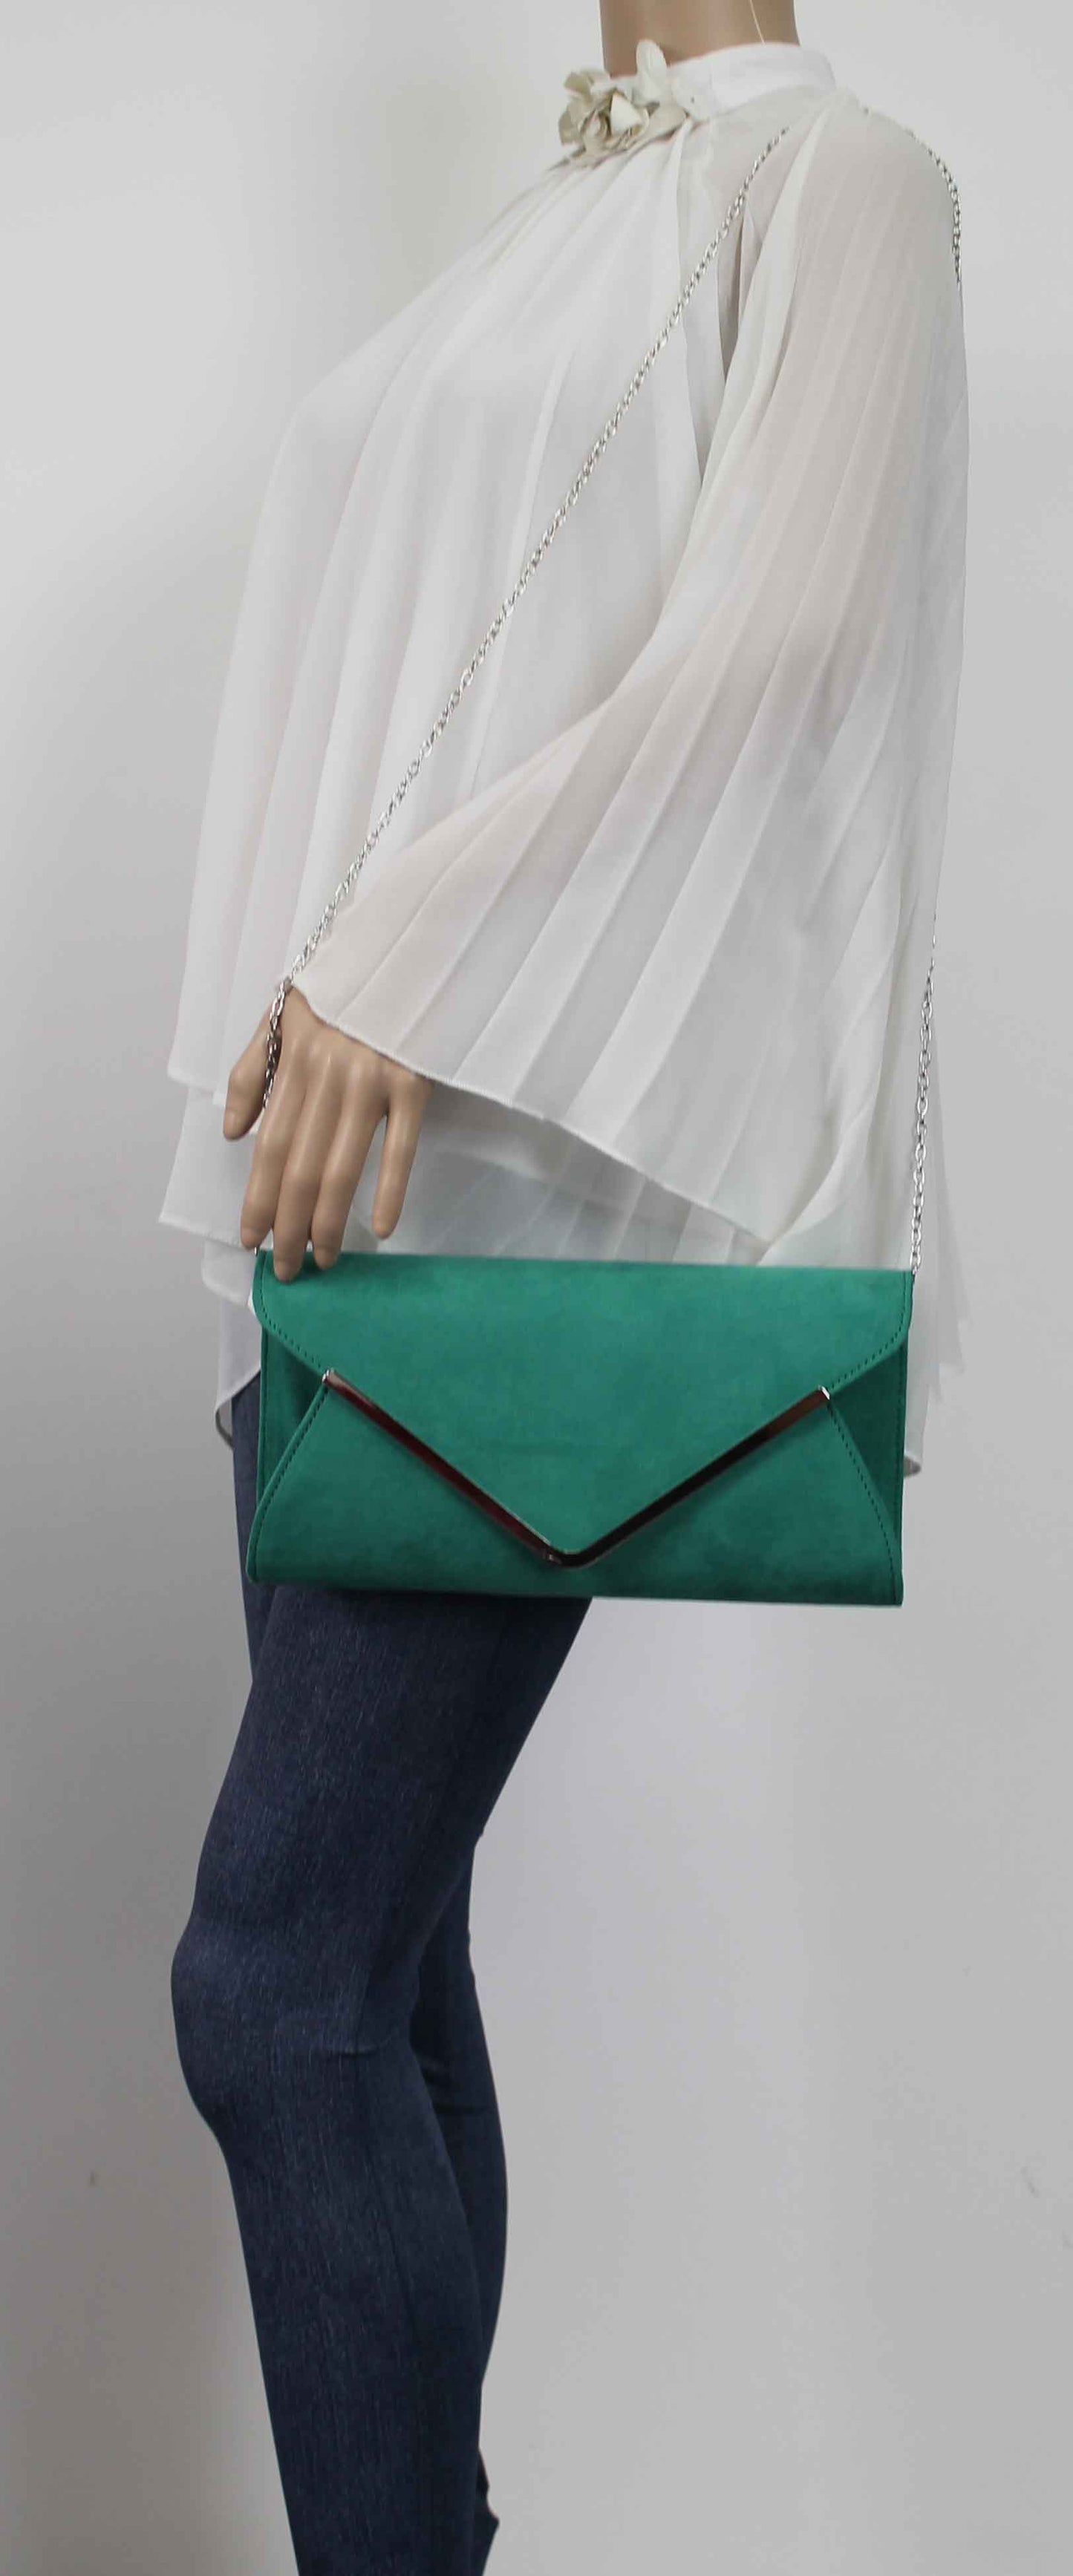 SWANKYSWANS Karlie Suede Clutch Bag Green Cute Cheap Clutch Bag For Weddings School and Work